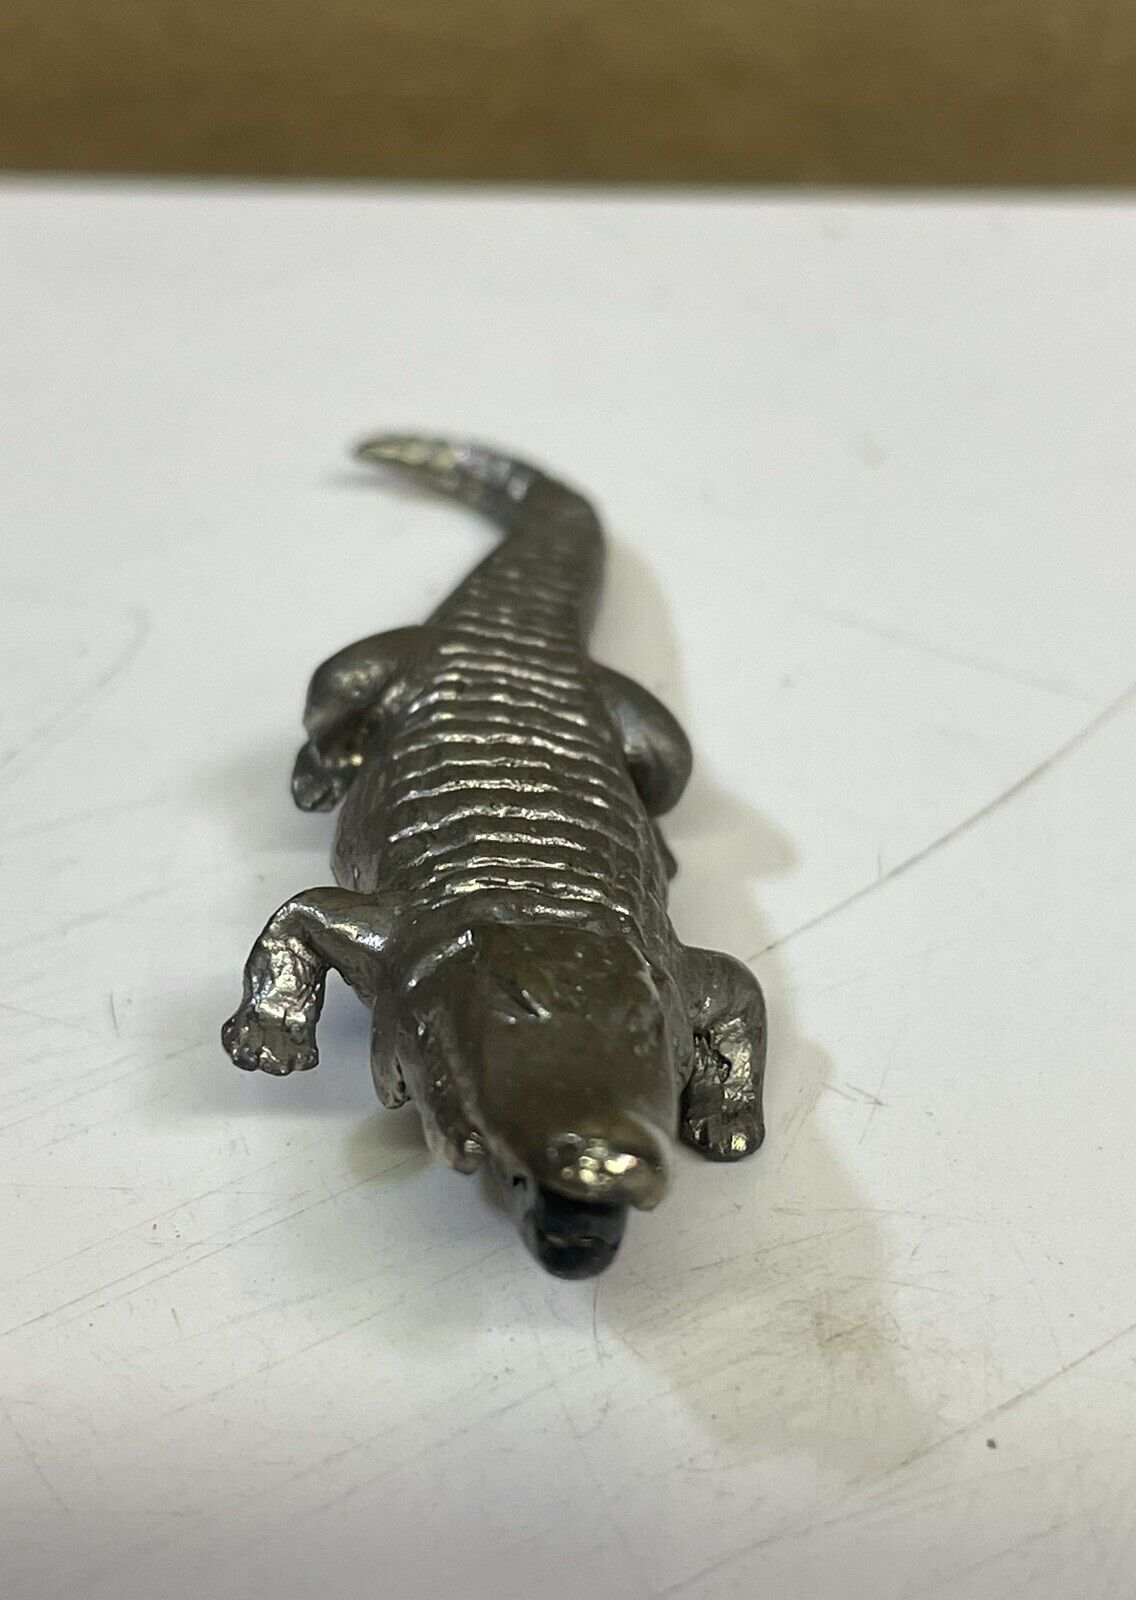 Vintage unused 1970’s alligator Roach clip